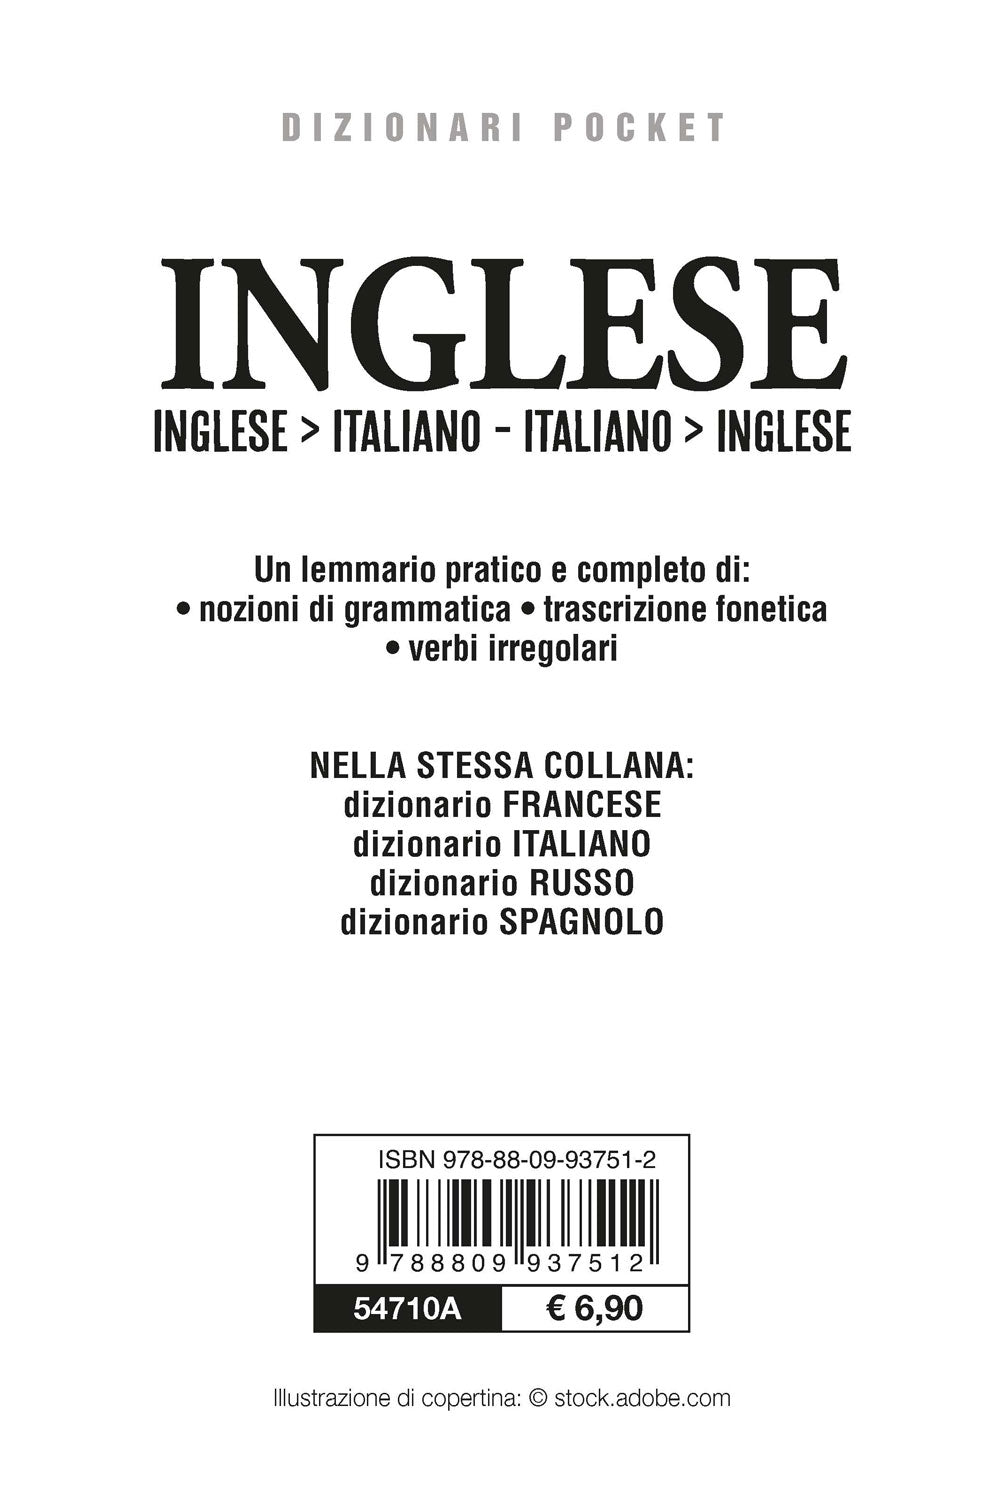 Dizionario inglese-italiano italiano-inglese